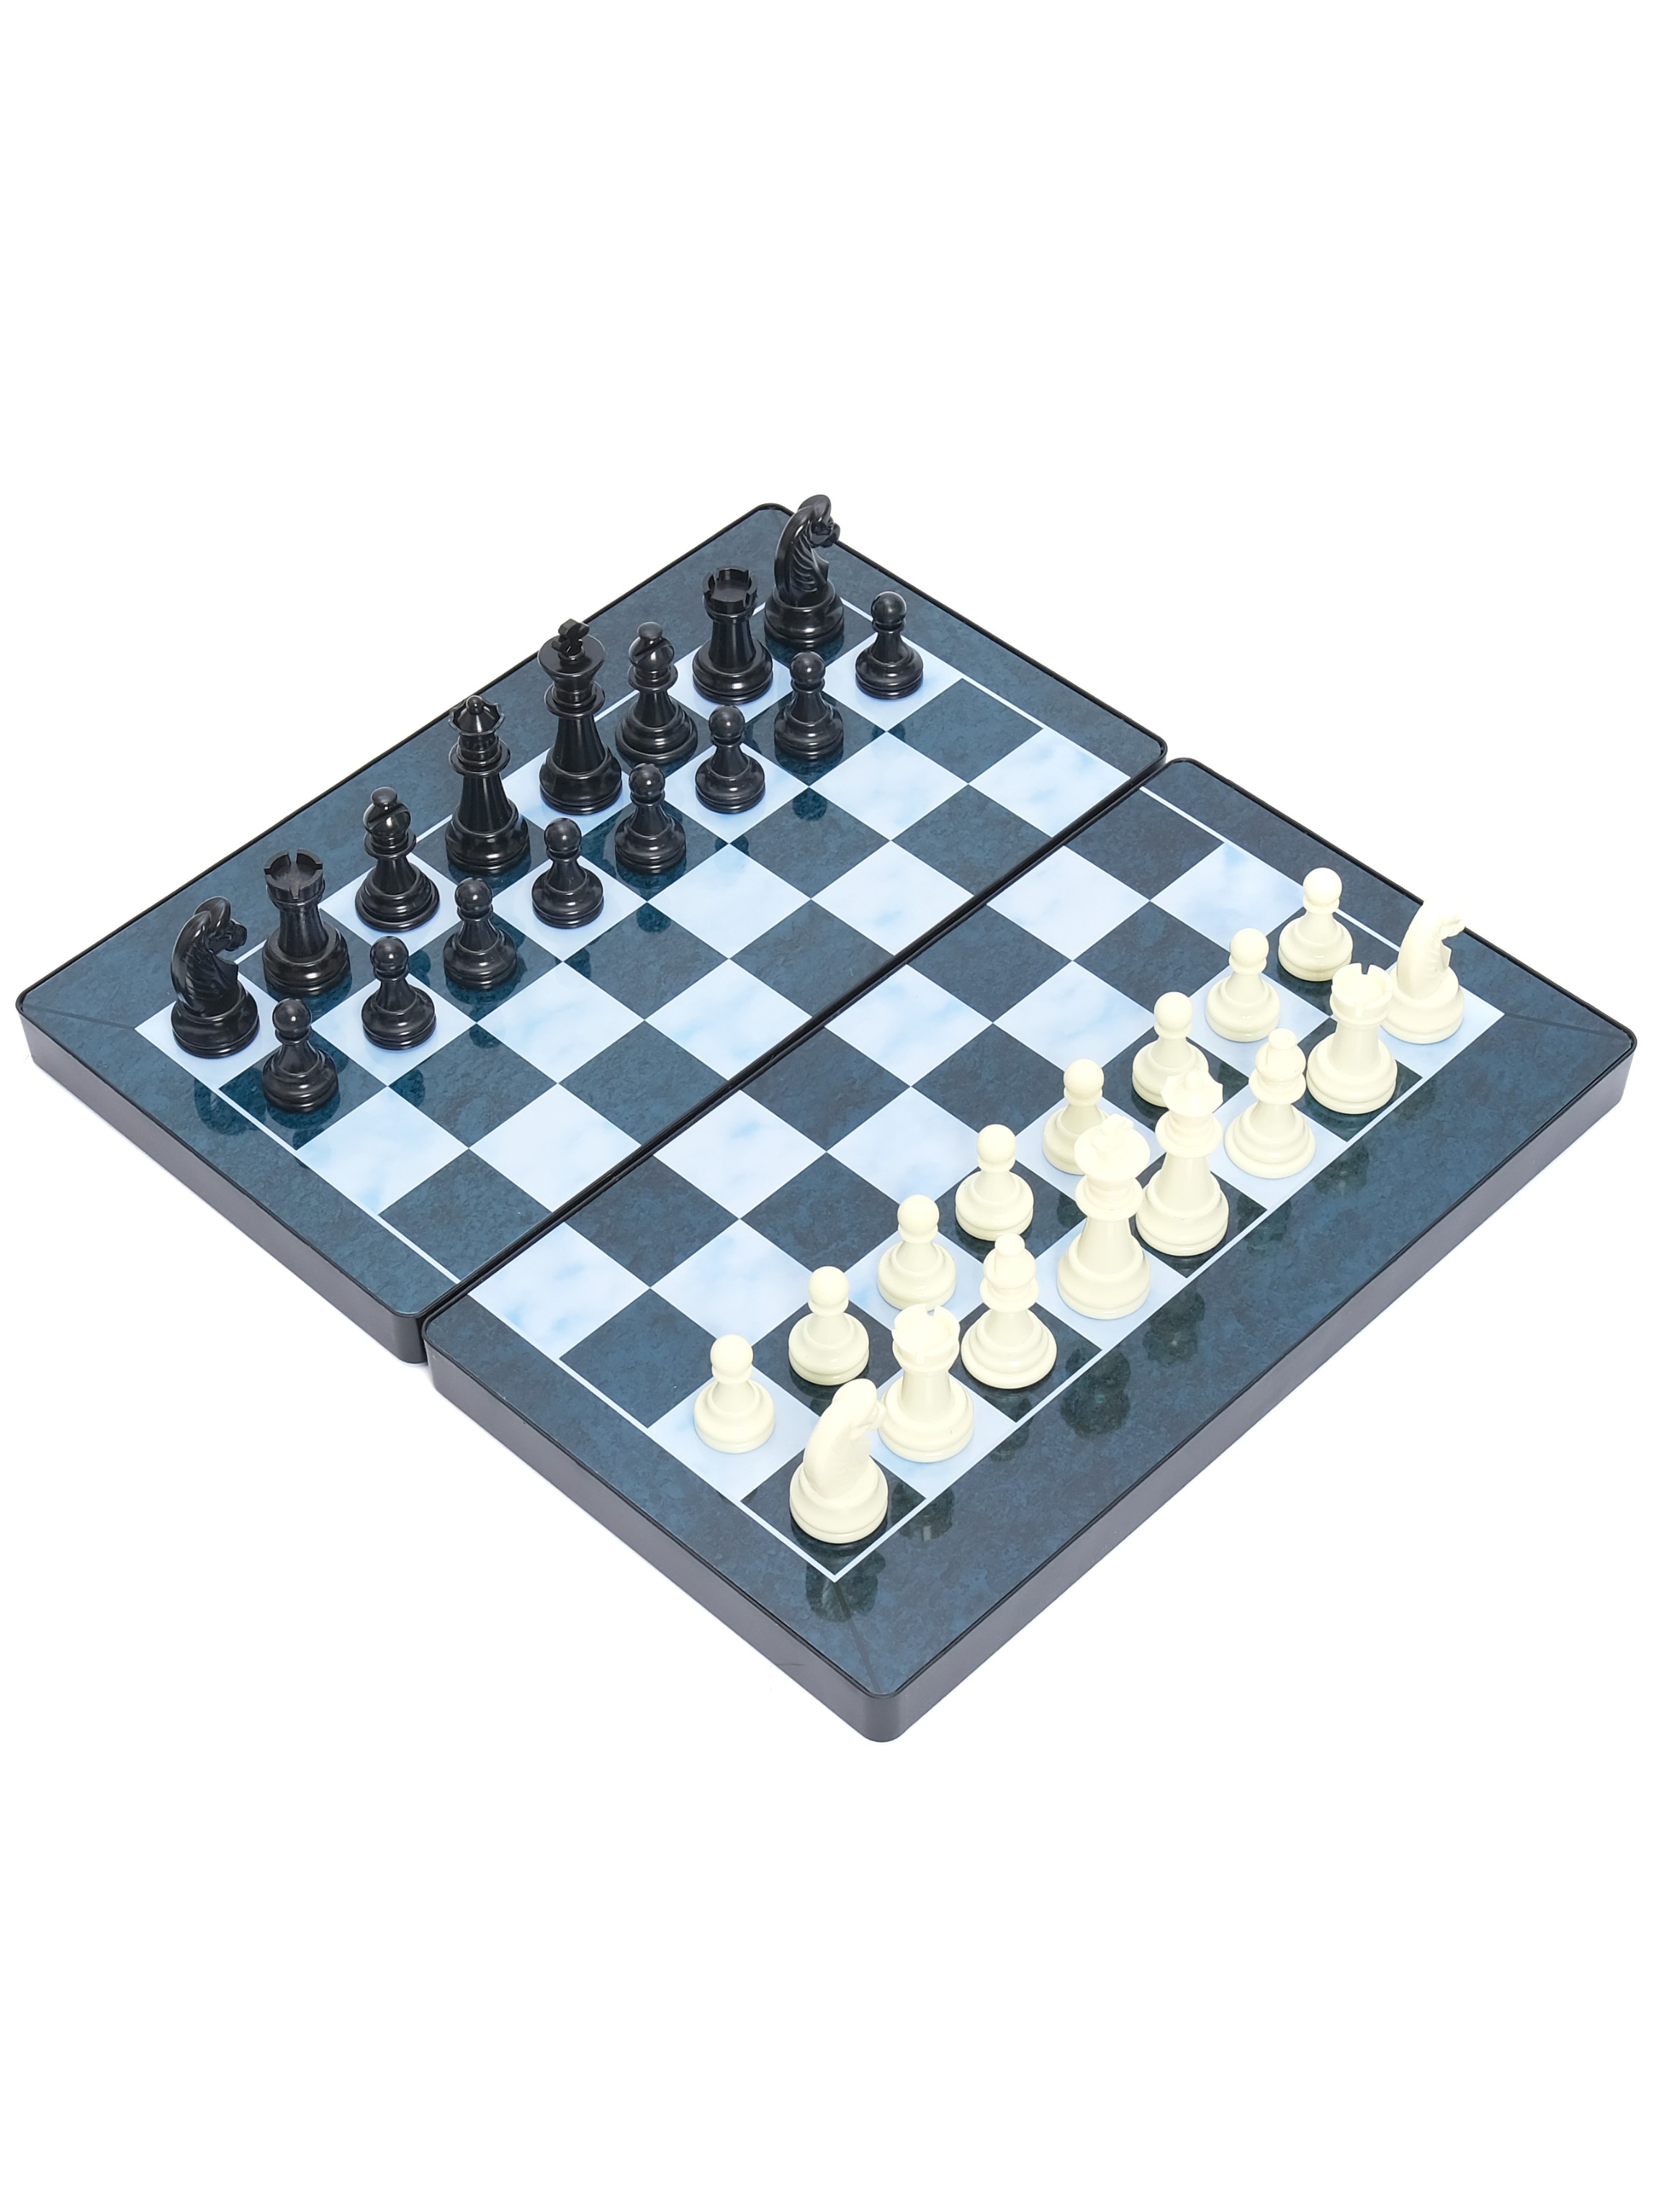 Шахматы, нарды, шашки 3 в 1, магнитные, 32х18 см. 8899 / Intellect Games